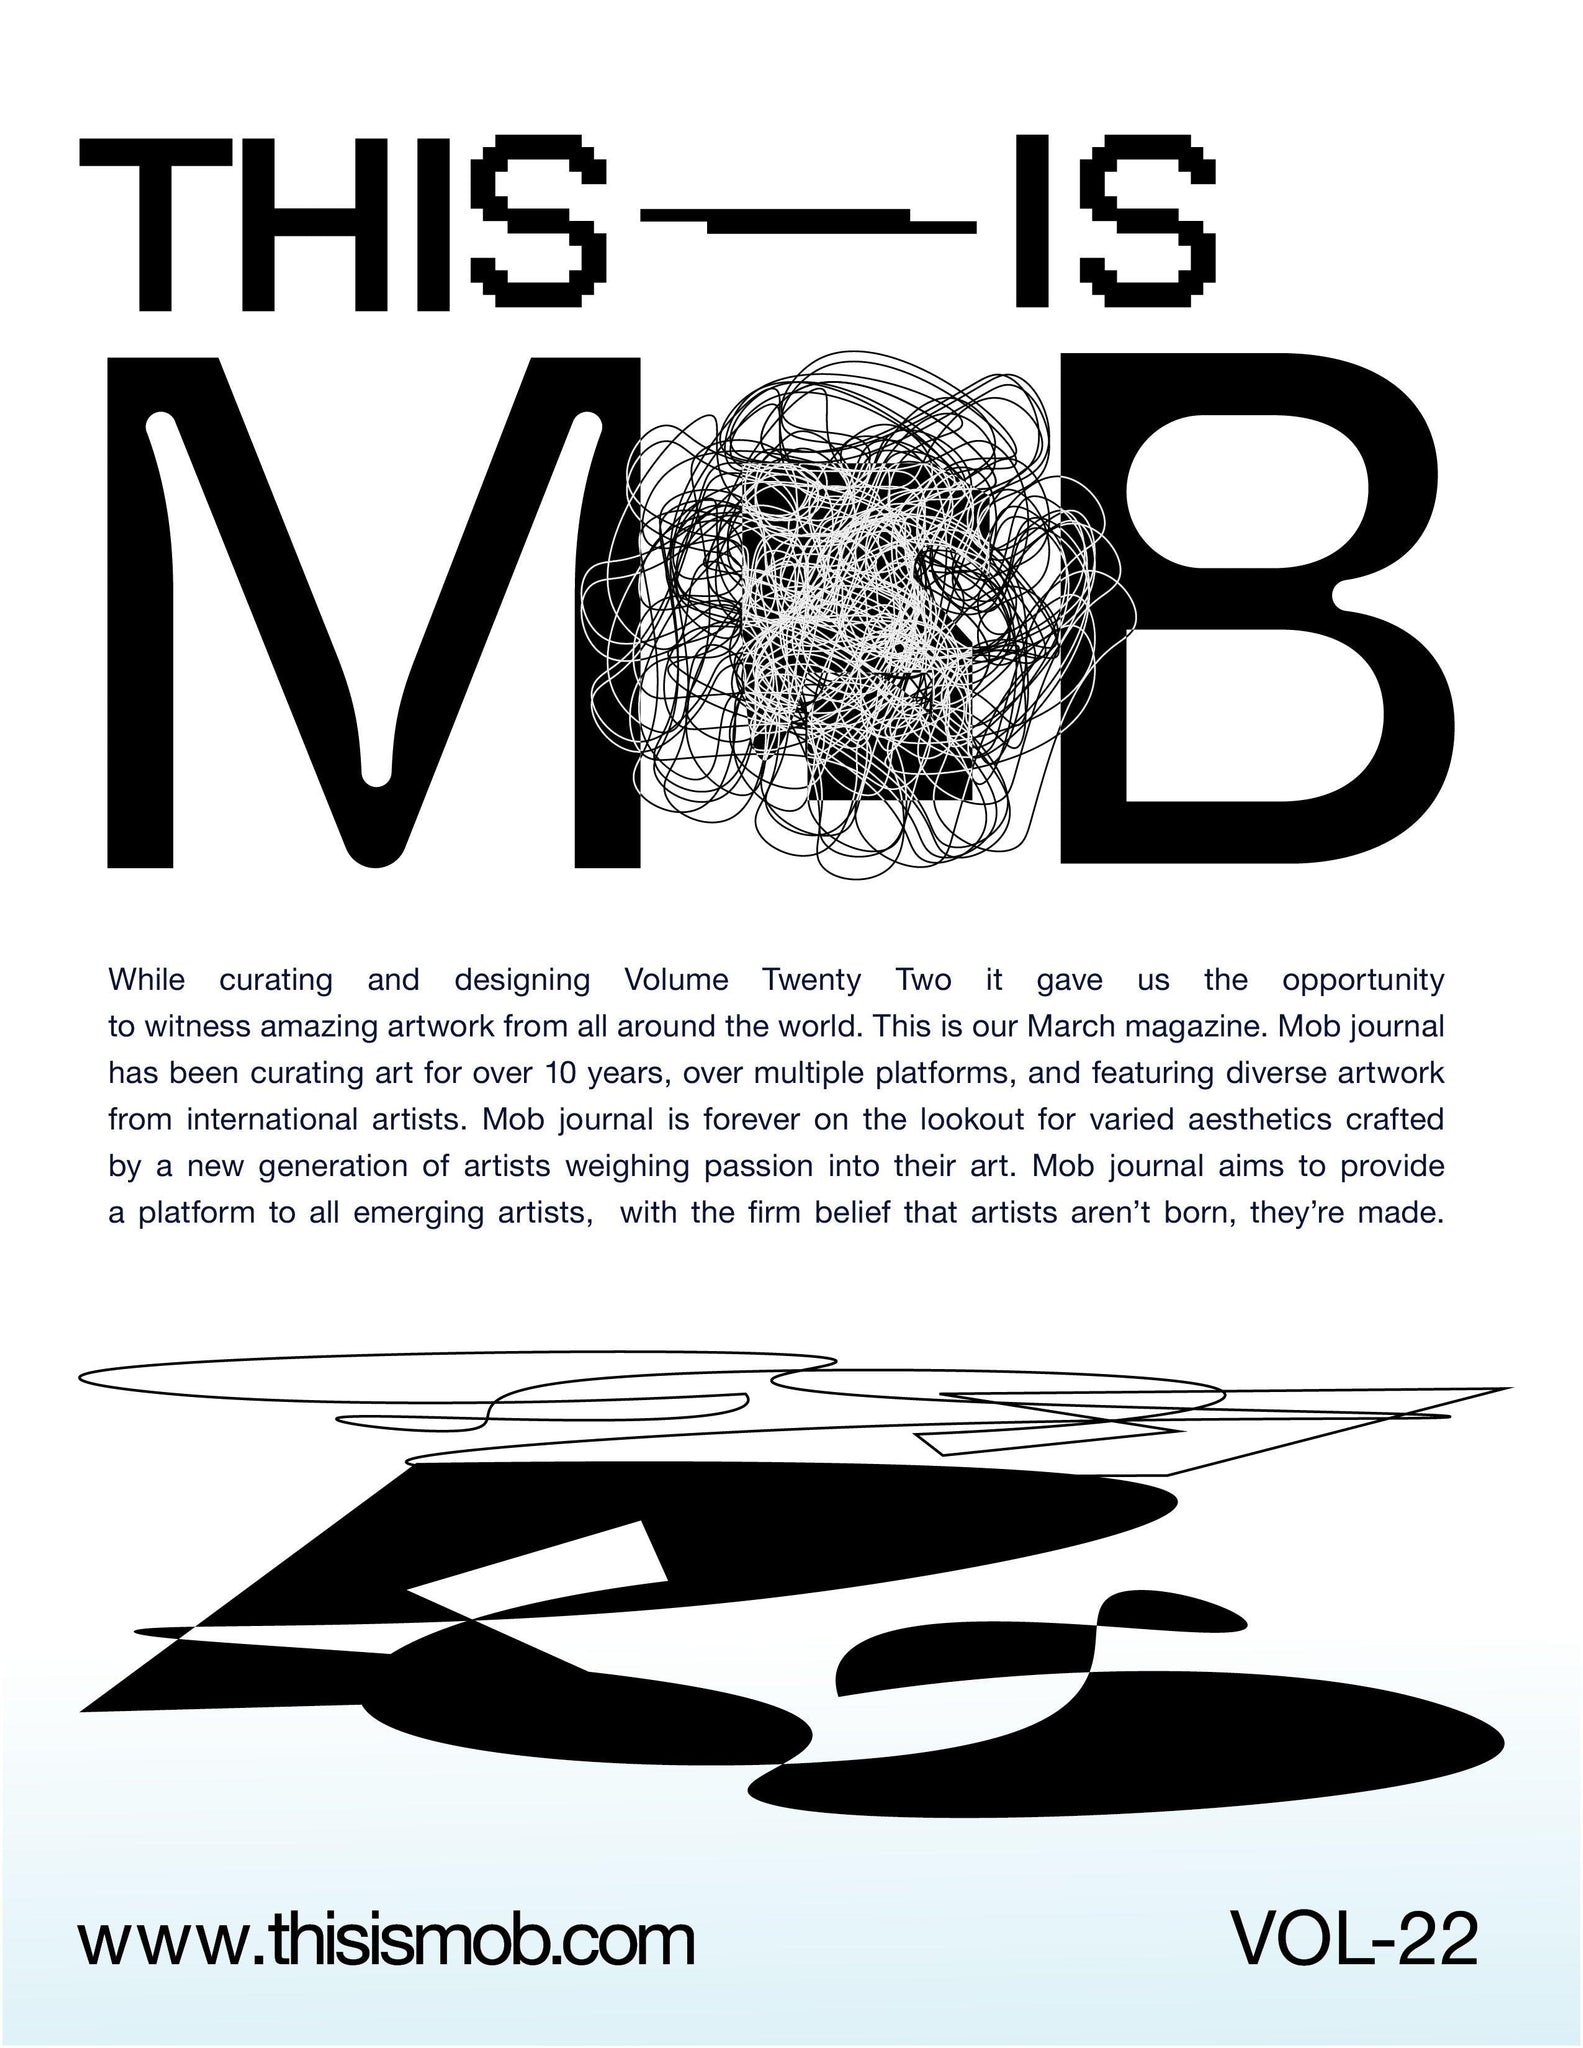 MOB JOURNAL | VOLUME TWENTY TWO | ISSUE #68 - Mob Journal